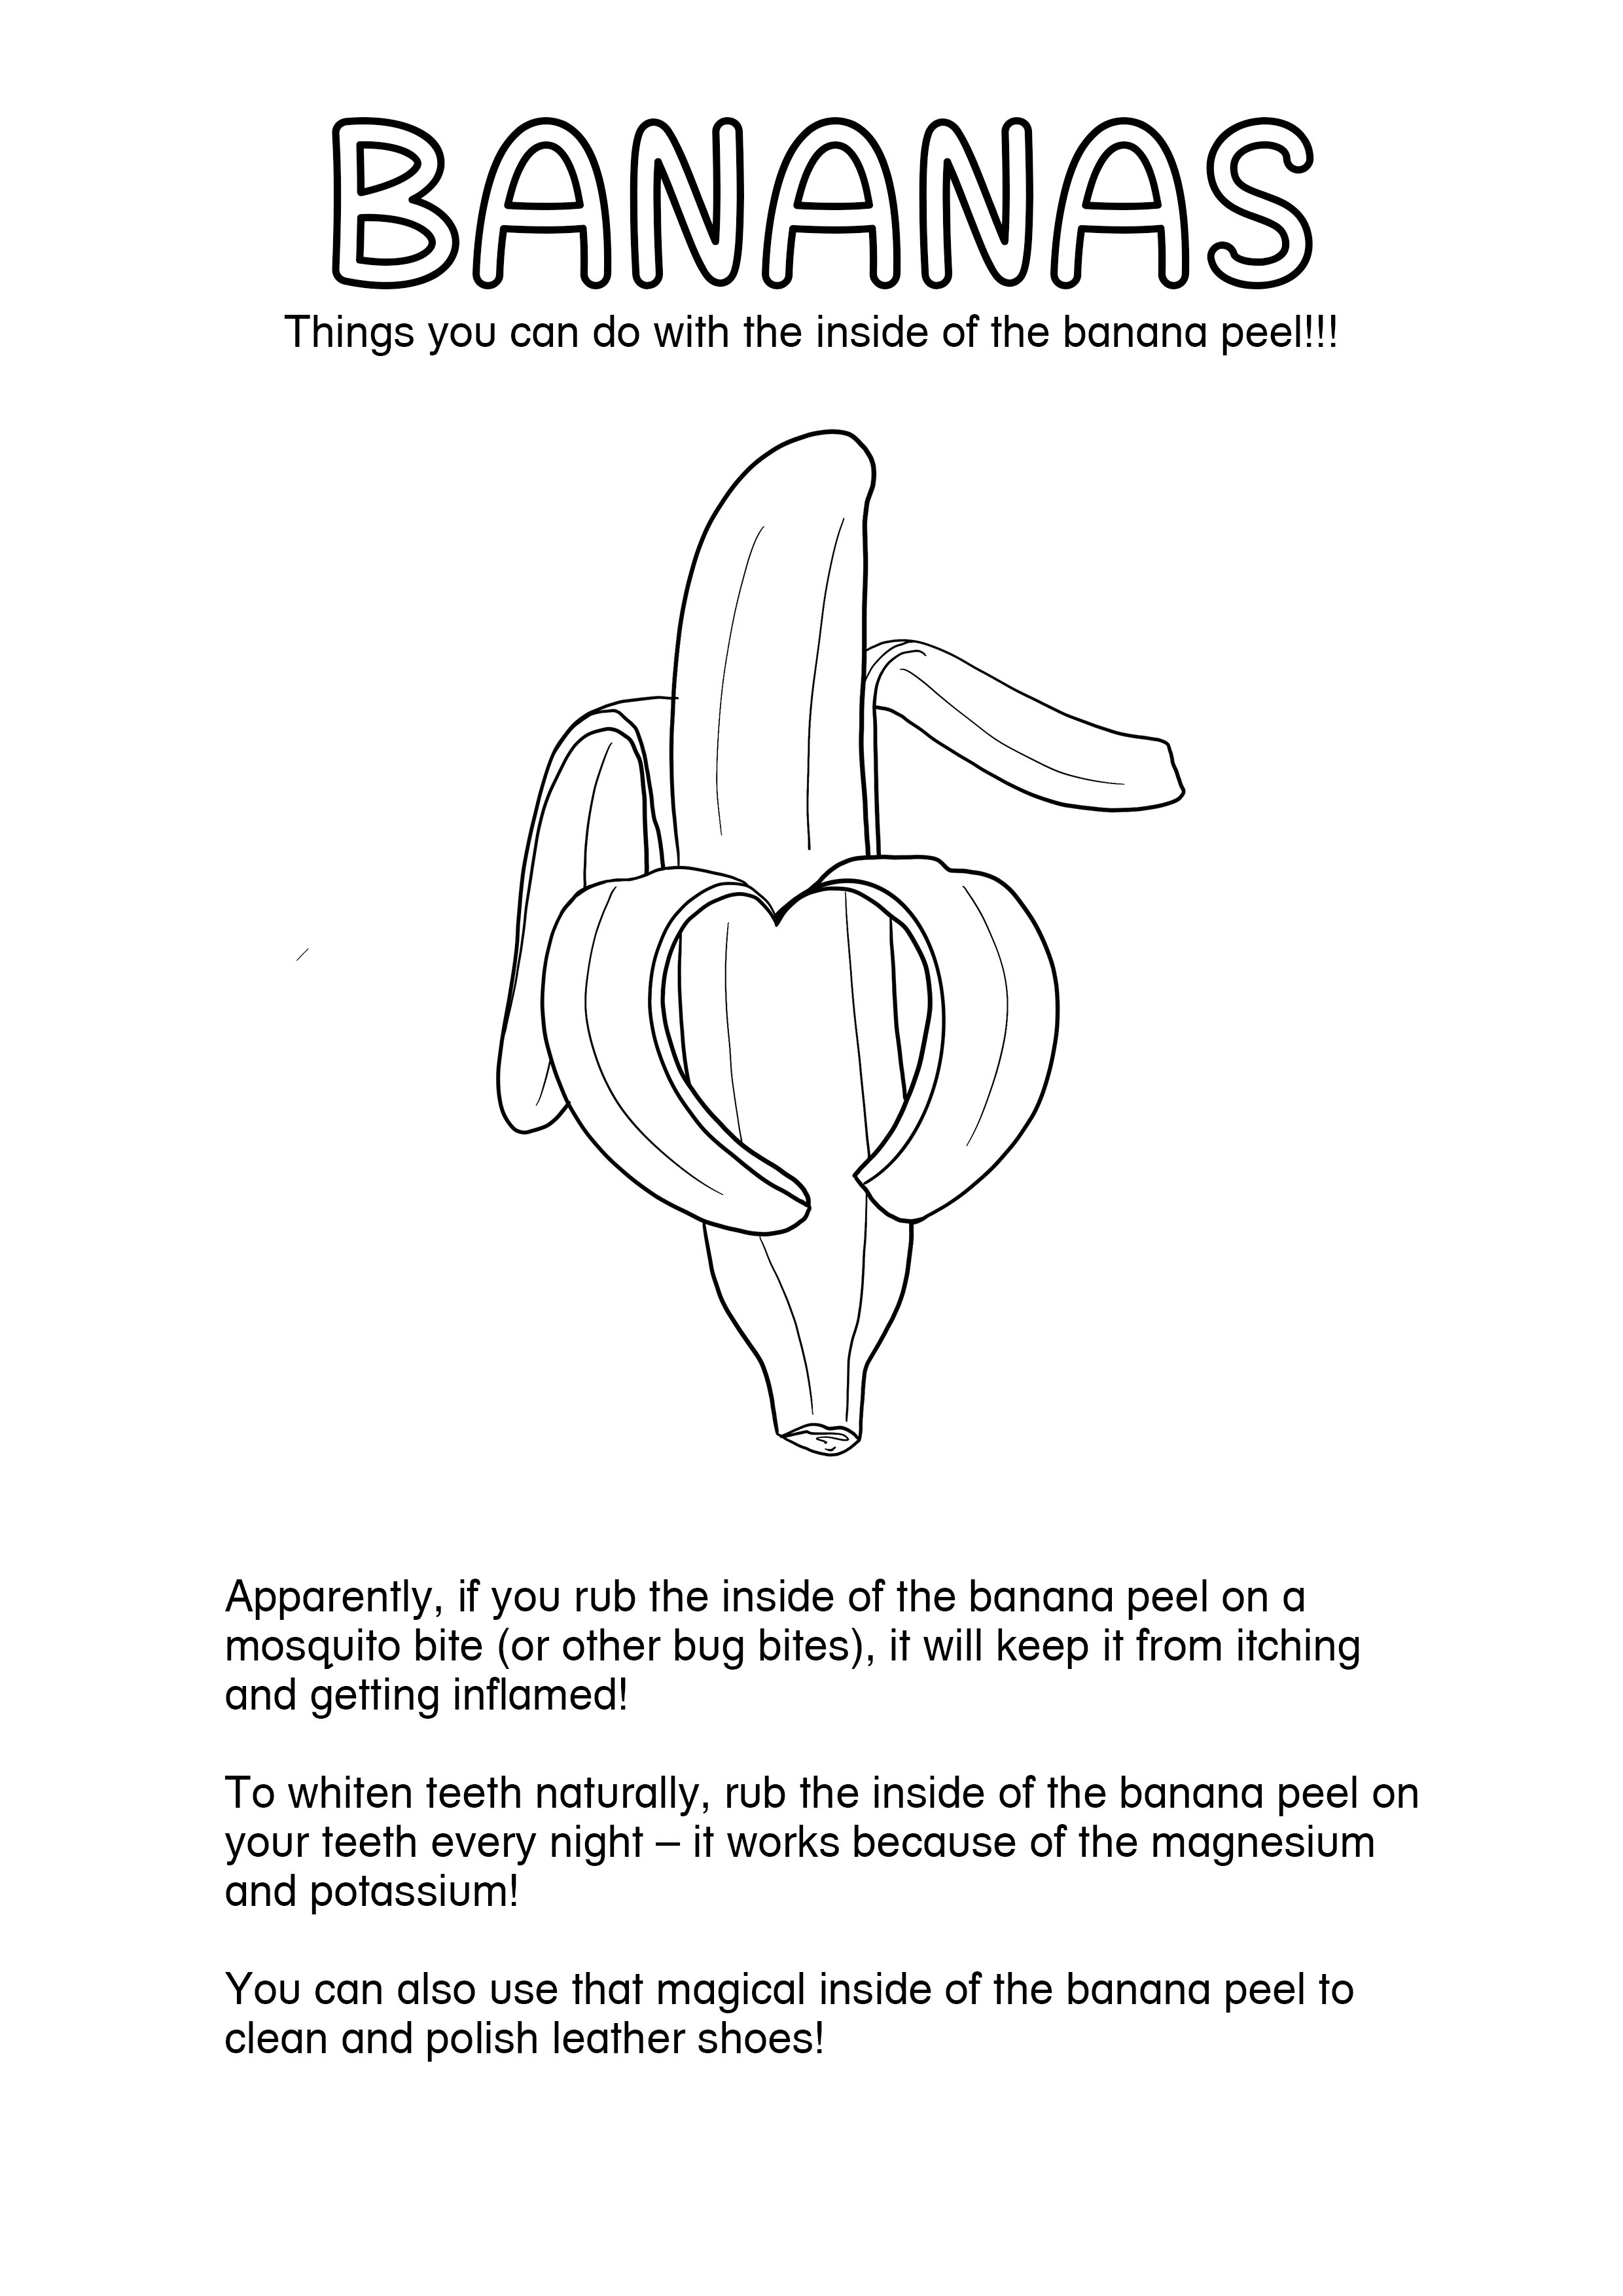 Banana04.jpg